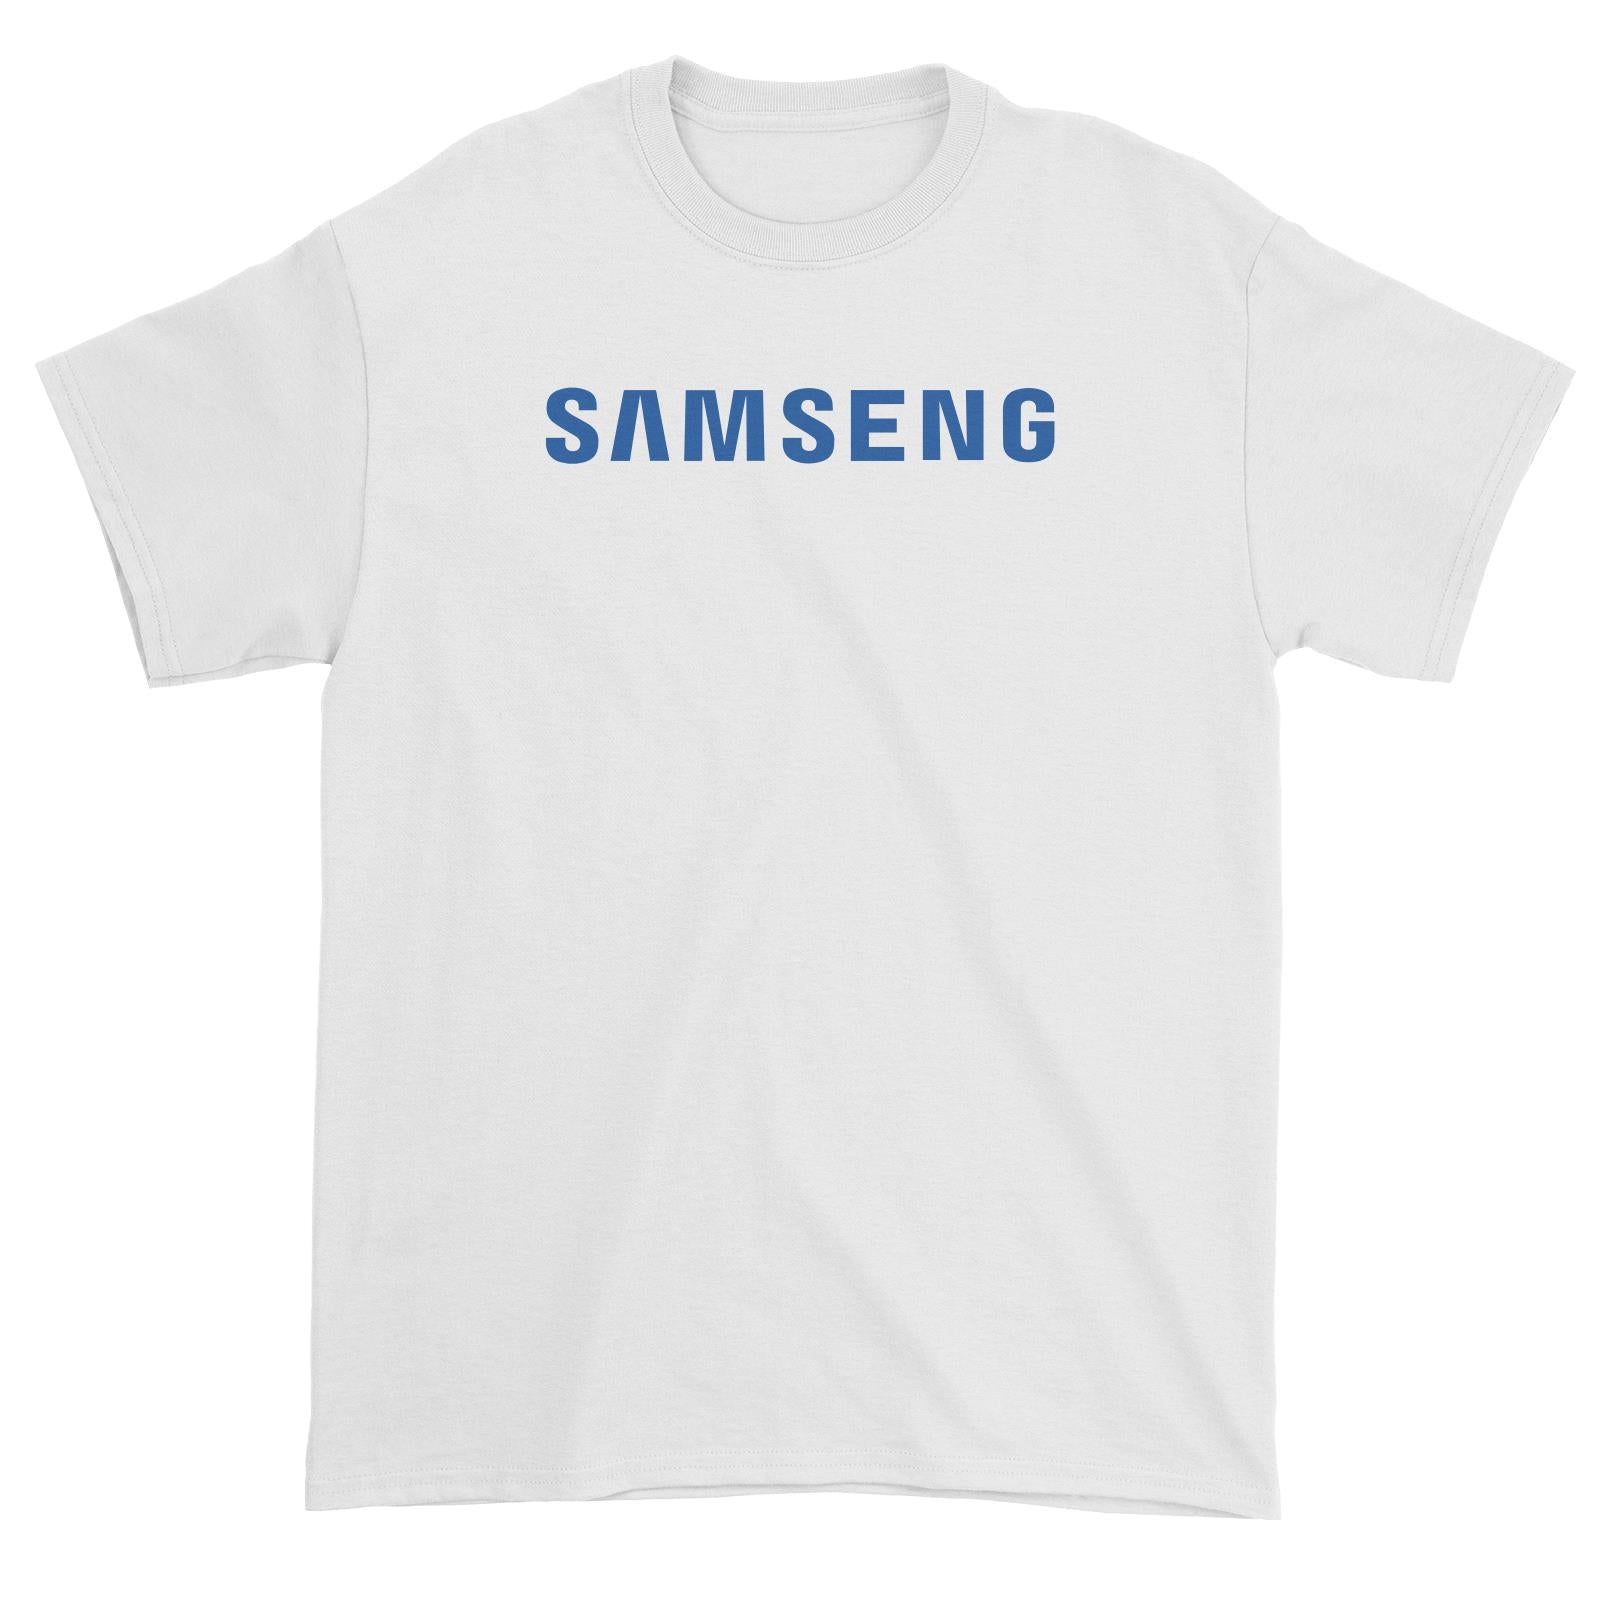 Slang Statement Samseng Unisex T-Shirt